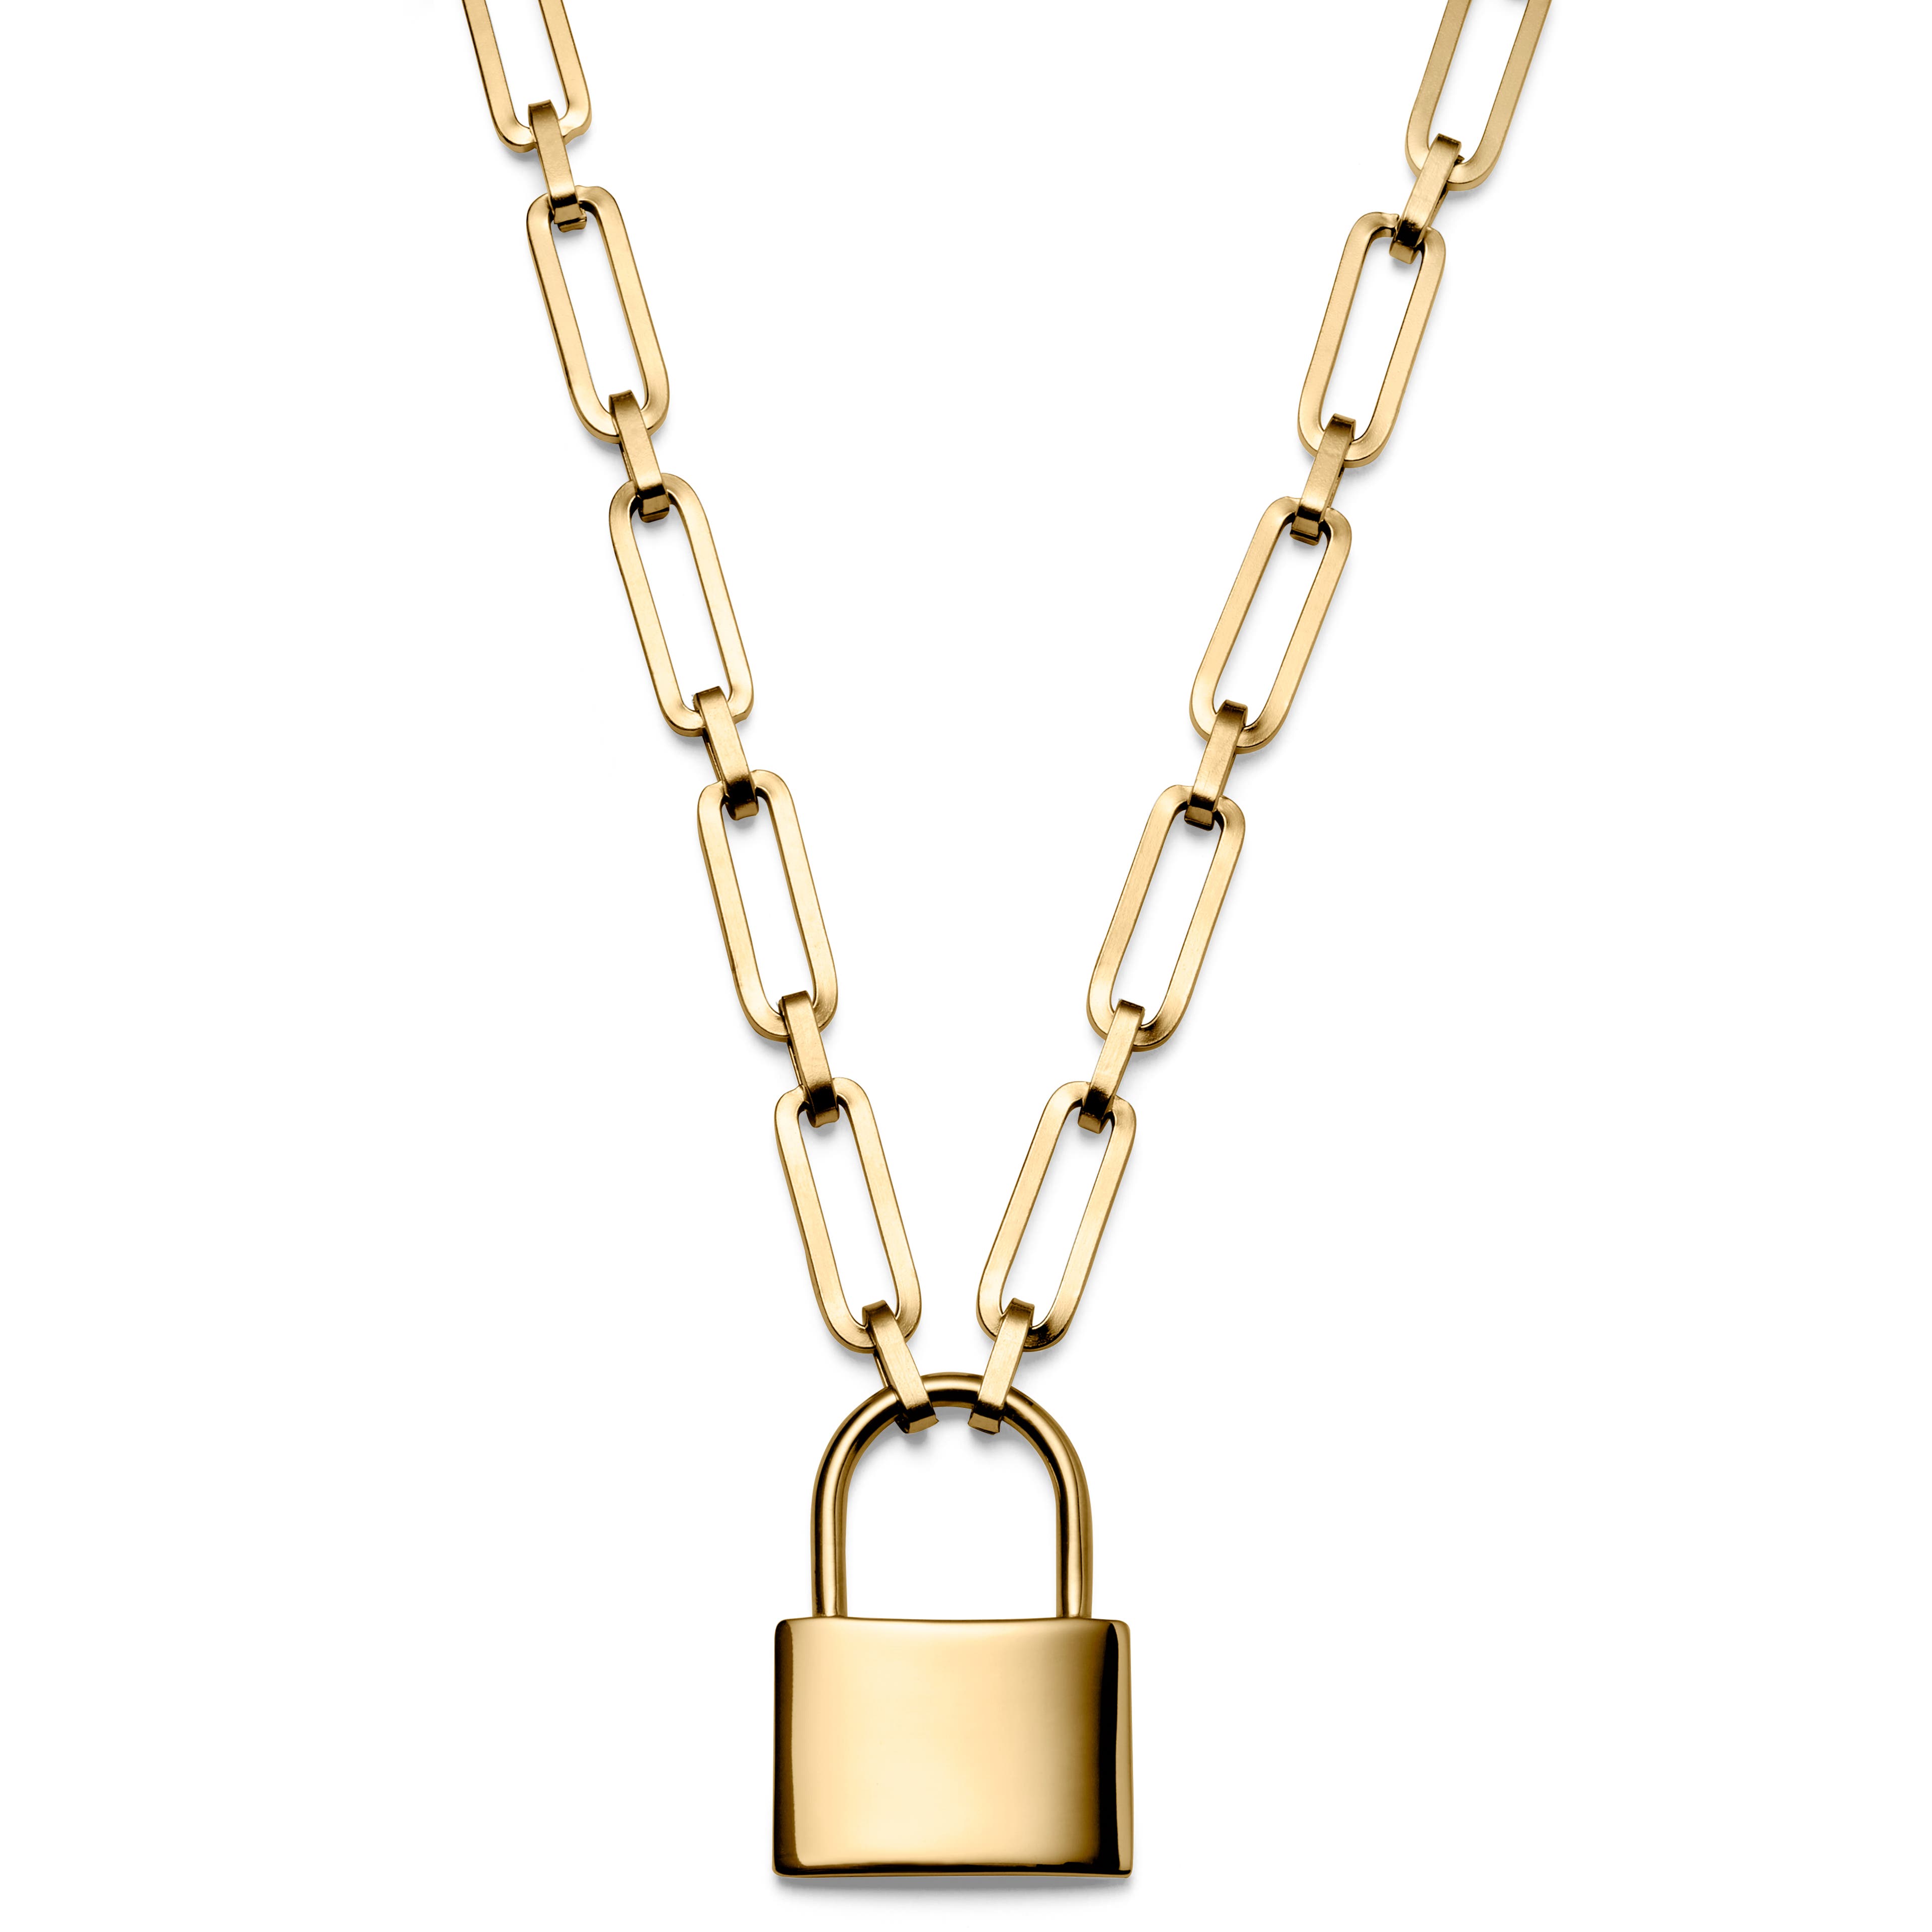 Louis Vuitton Key 304 Brass Goldtone w/ Swivel Ring Clasp